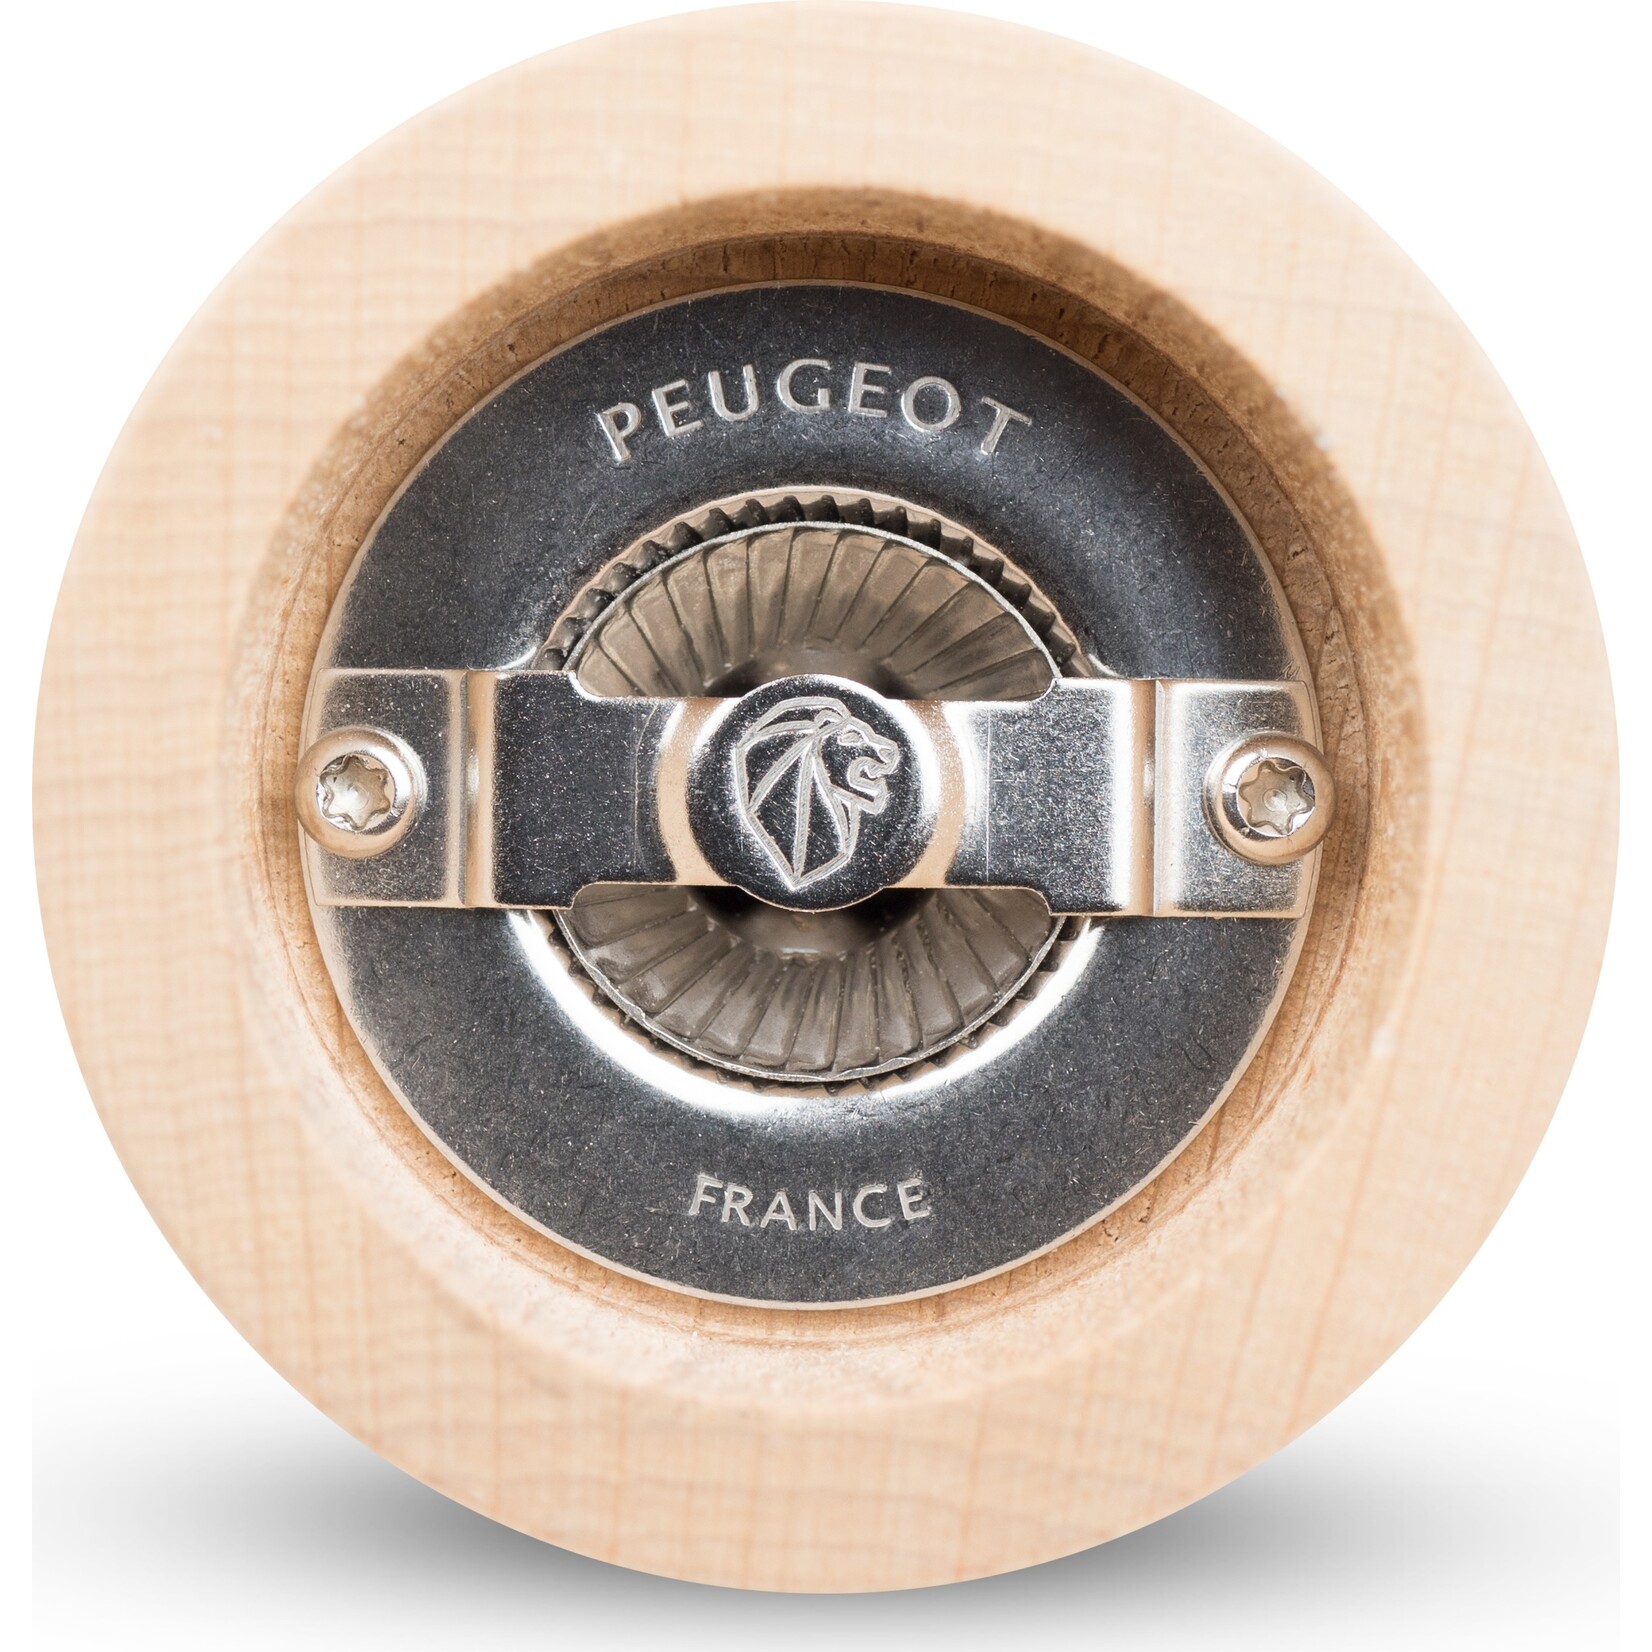 Peugeot Peugeot Paris zoutmolen 12 cm, naturel, beukenhout